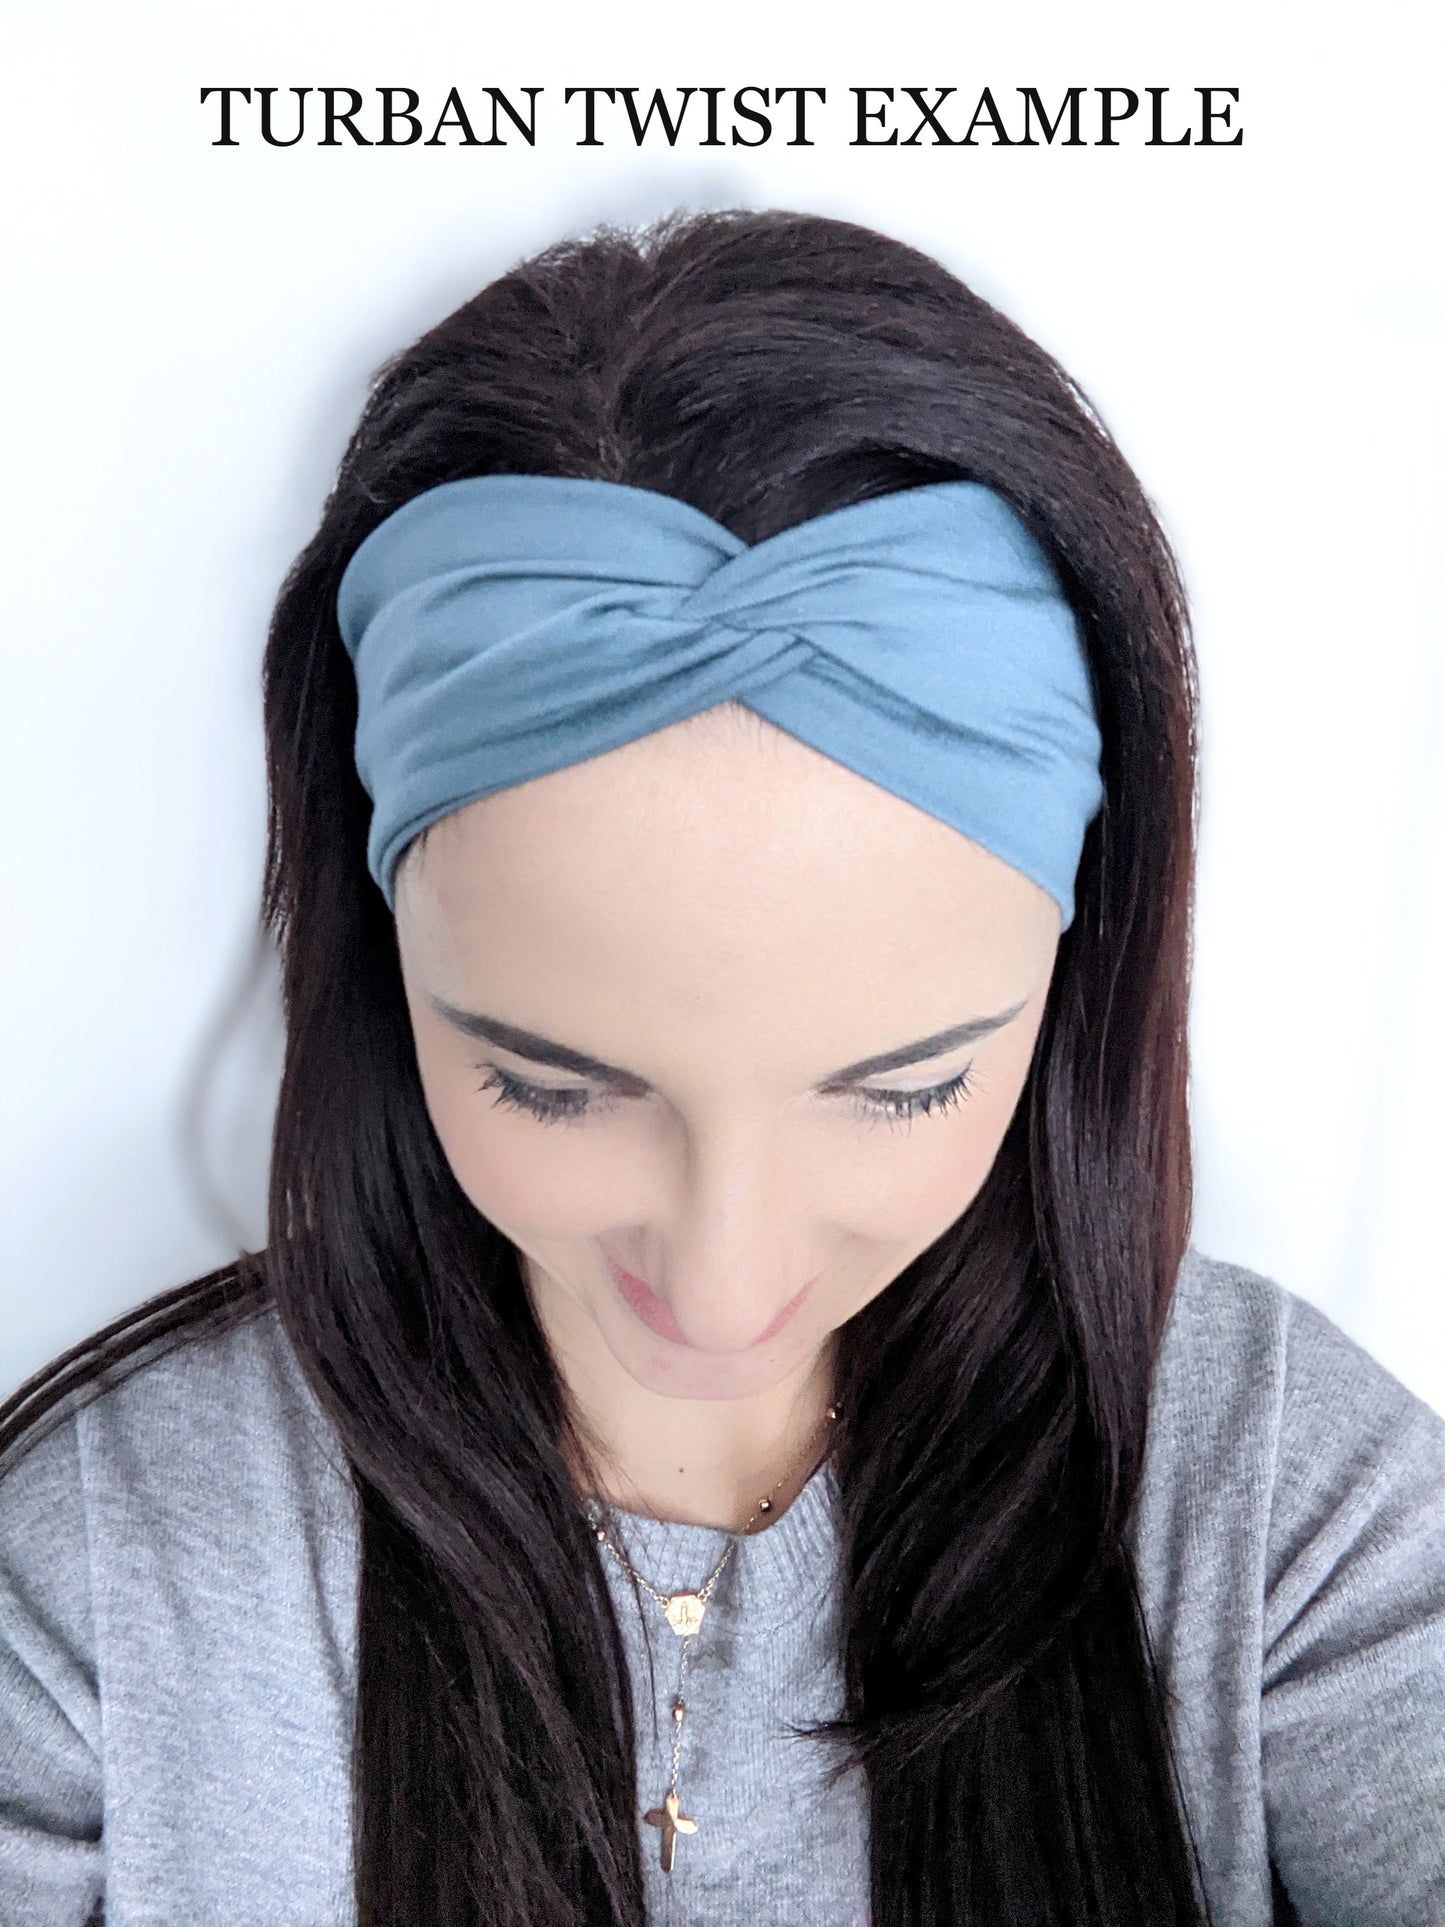 Groovy Floral Print Headband | Wide or Turban Twist Headband for Women